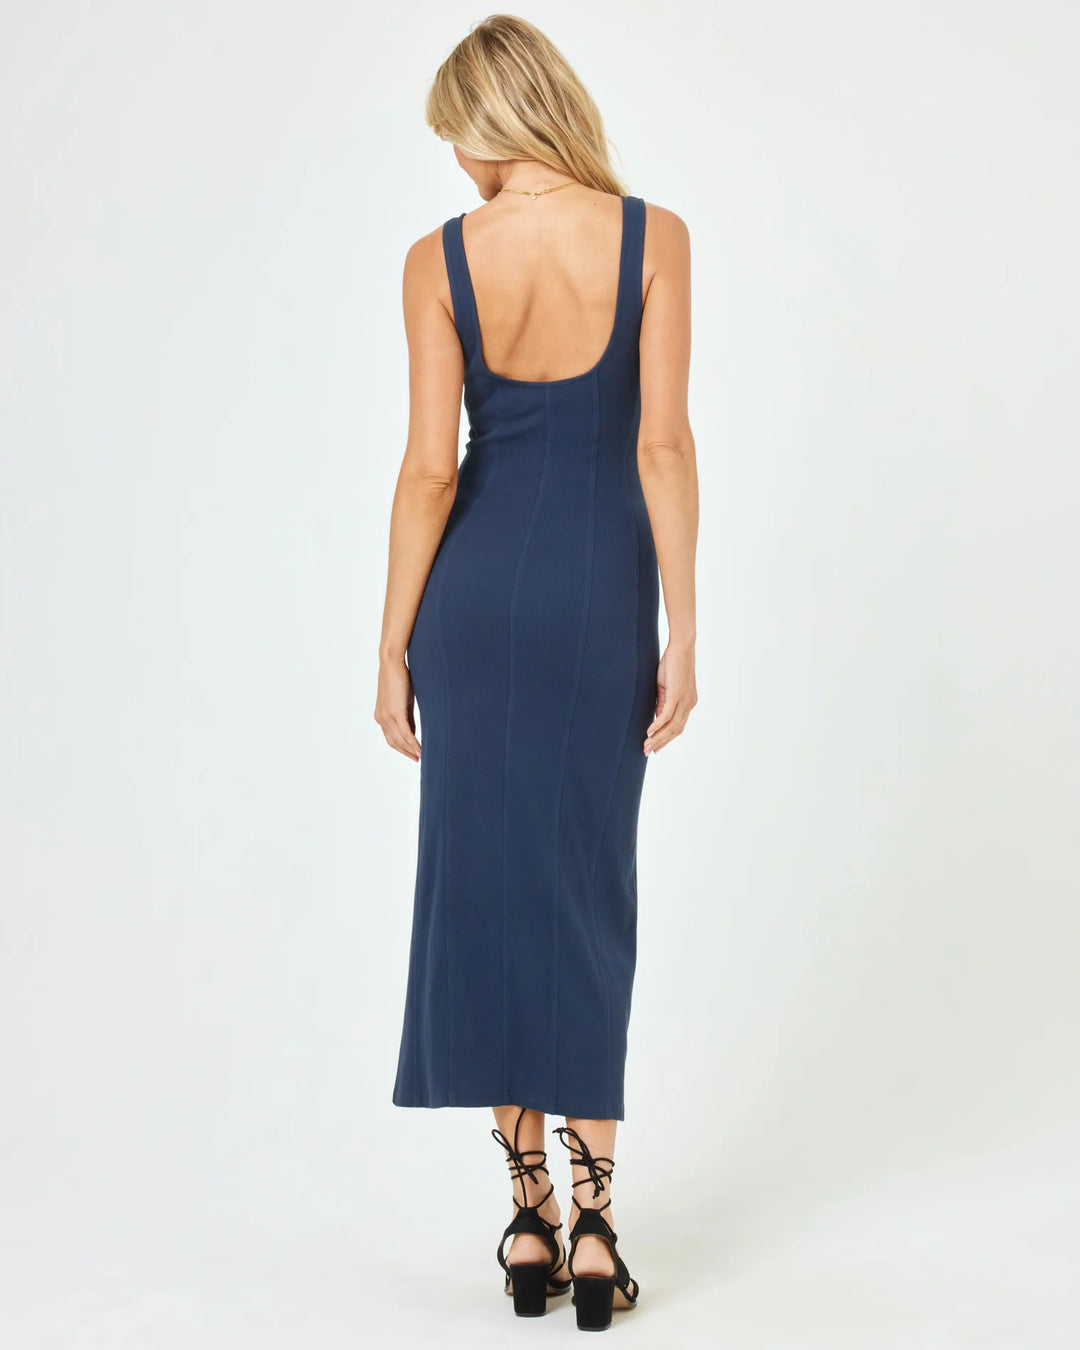 LSpace VIVIENNE Dress - Slate - Sun Diego Boardshop